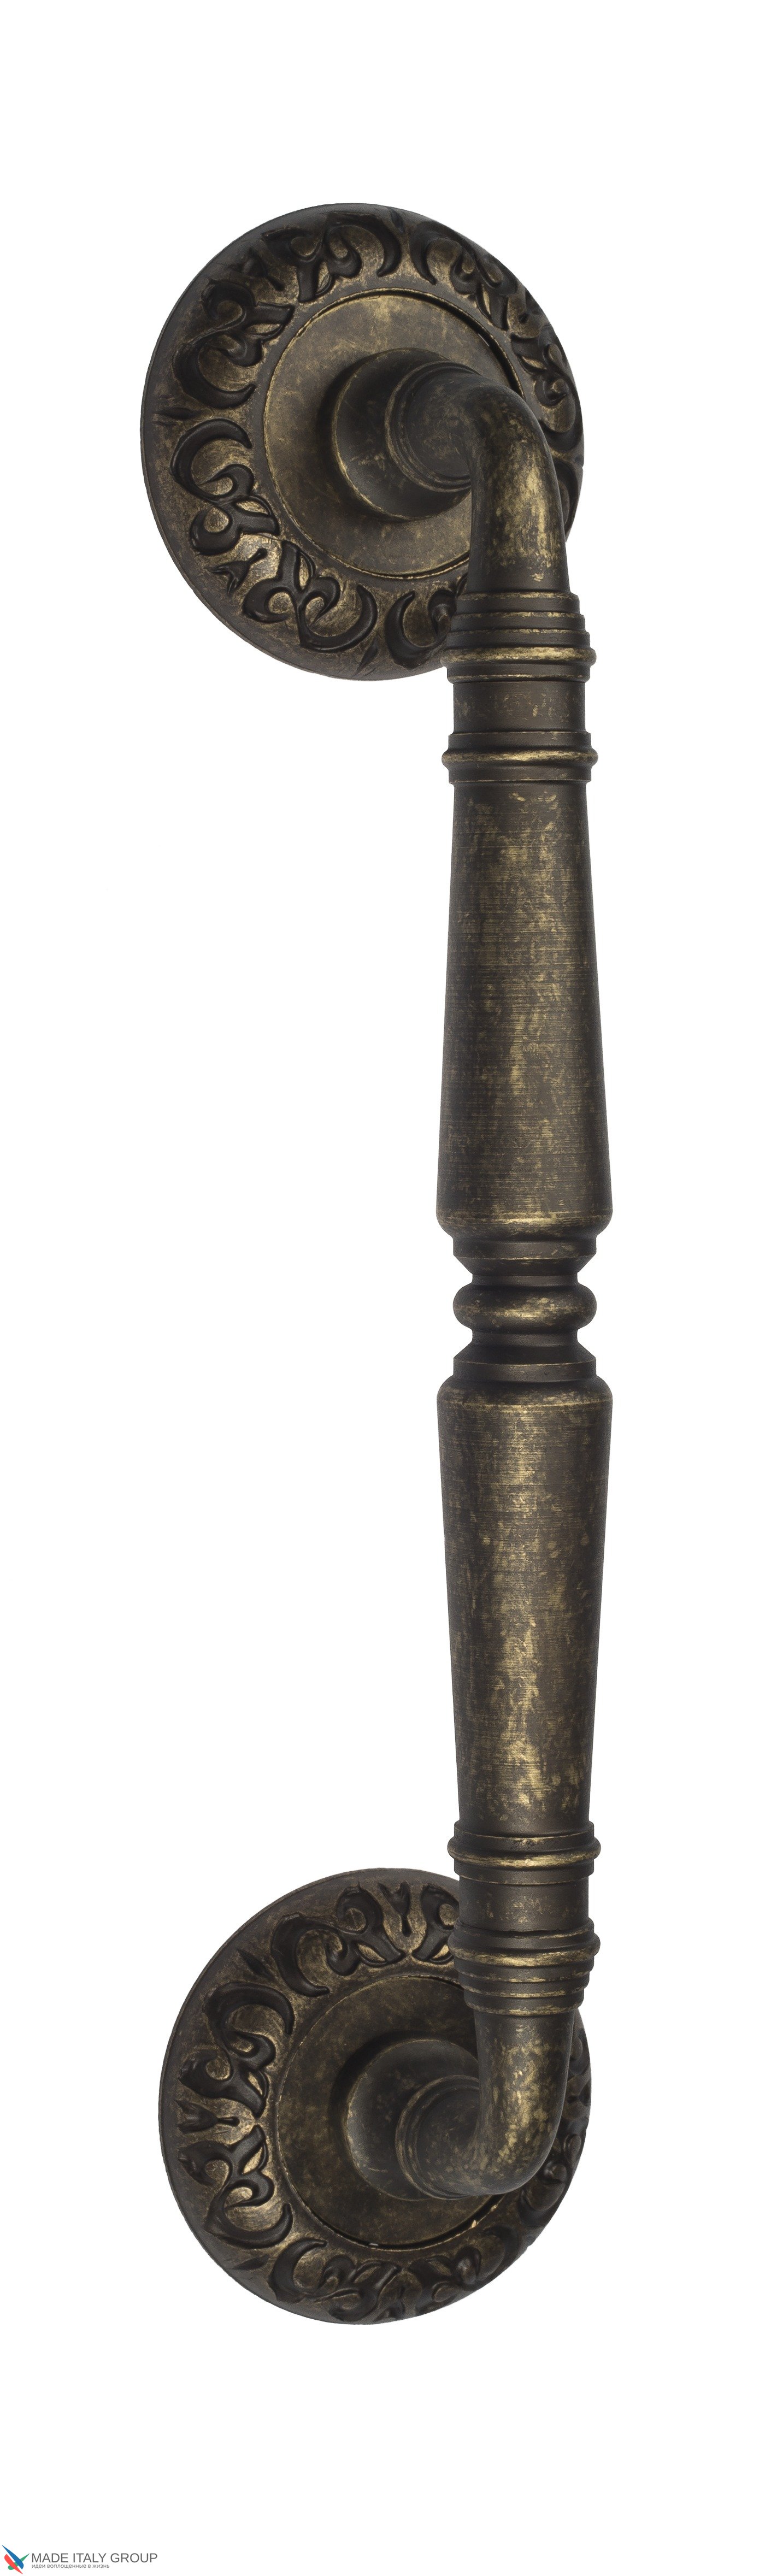 Ручка скоба Venezia "VIGNOLE" 270мм (210мм) D4 античная бронза